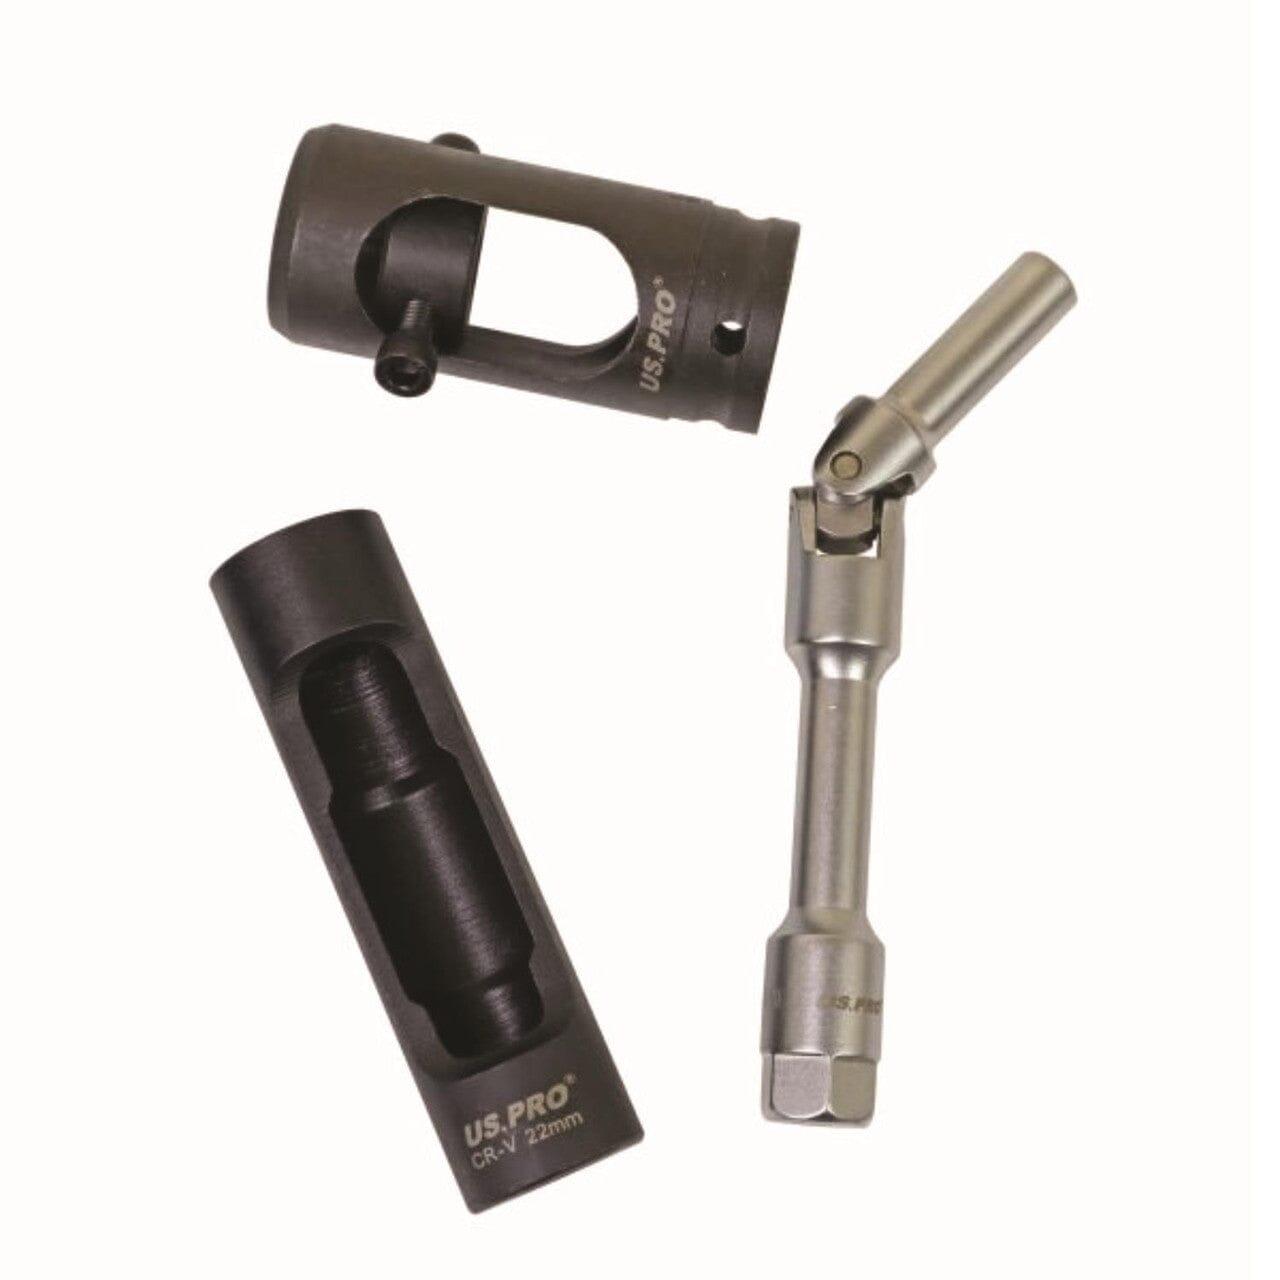 US PRO Tools 9pc Diesel Injector & Glow Plug Removal Socket Sockets Set 5641 - Tools 2U Direct SW